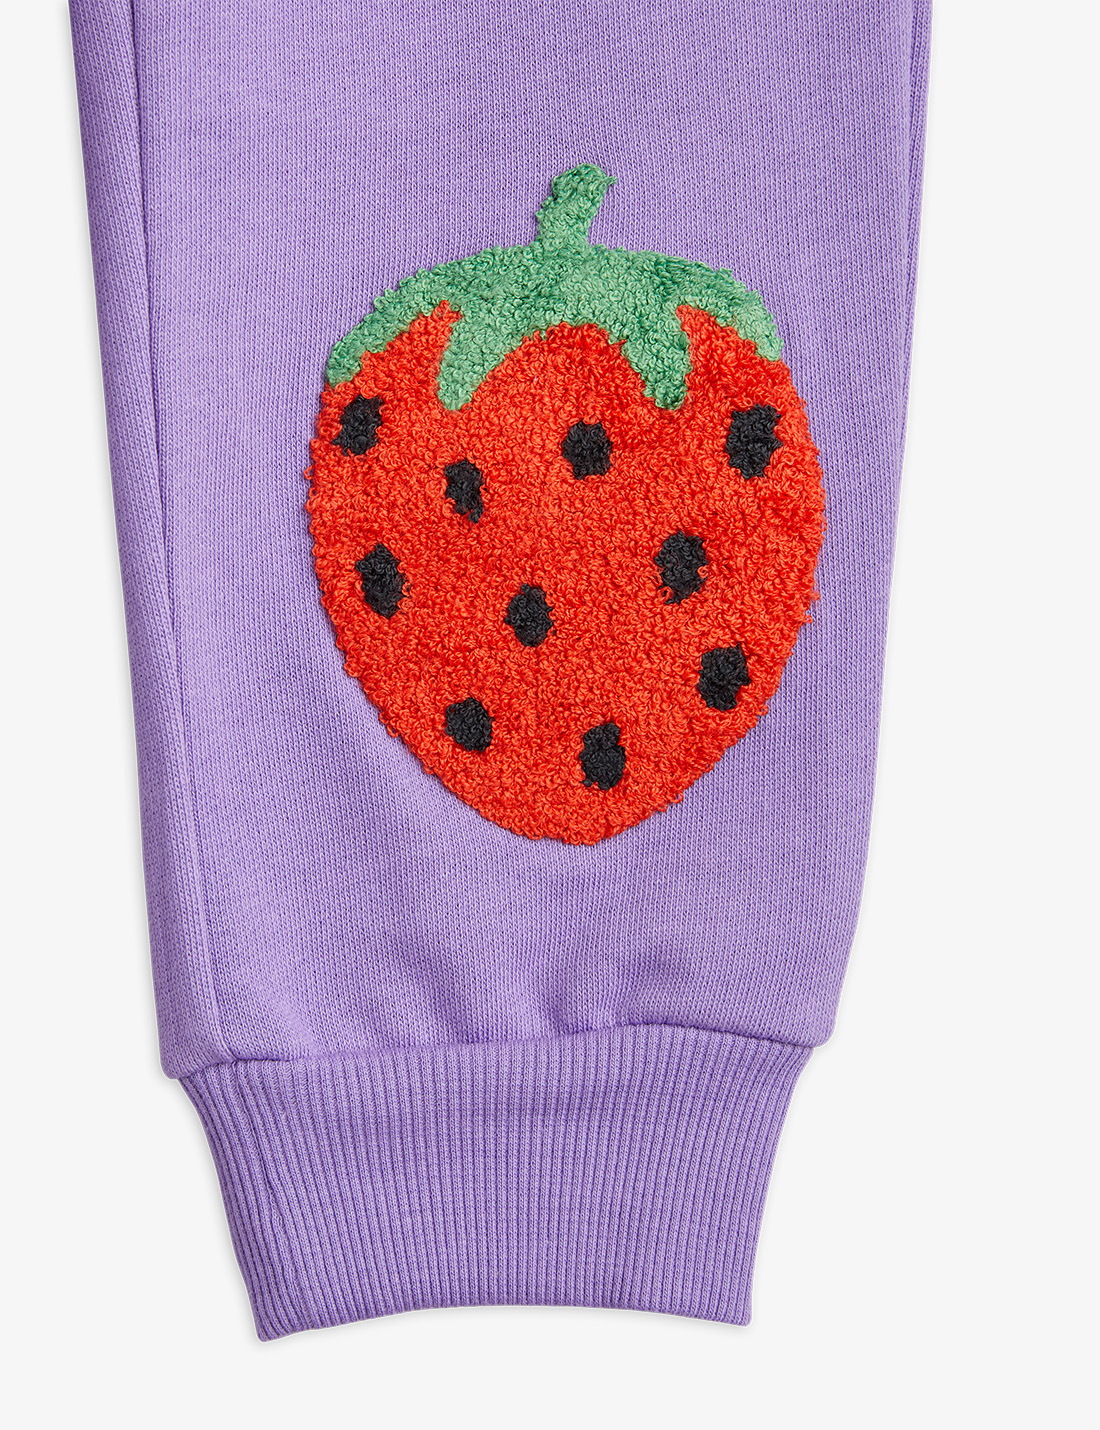 Sweatpants Strawberries purple